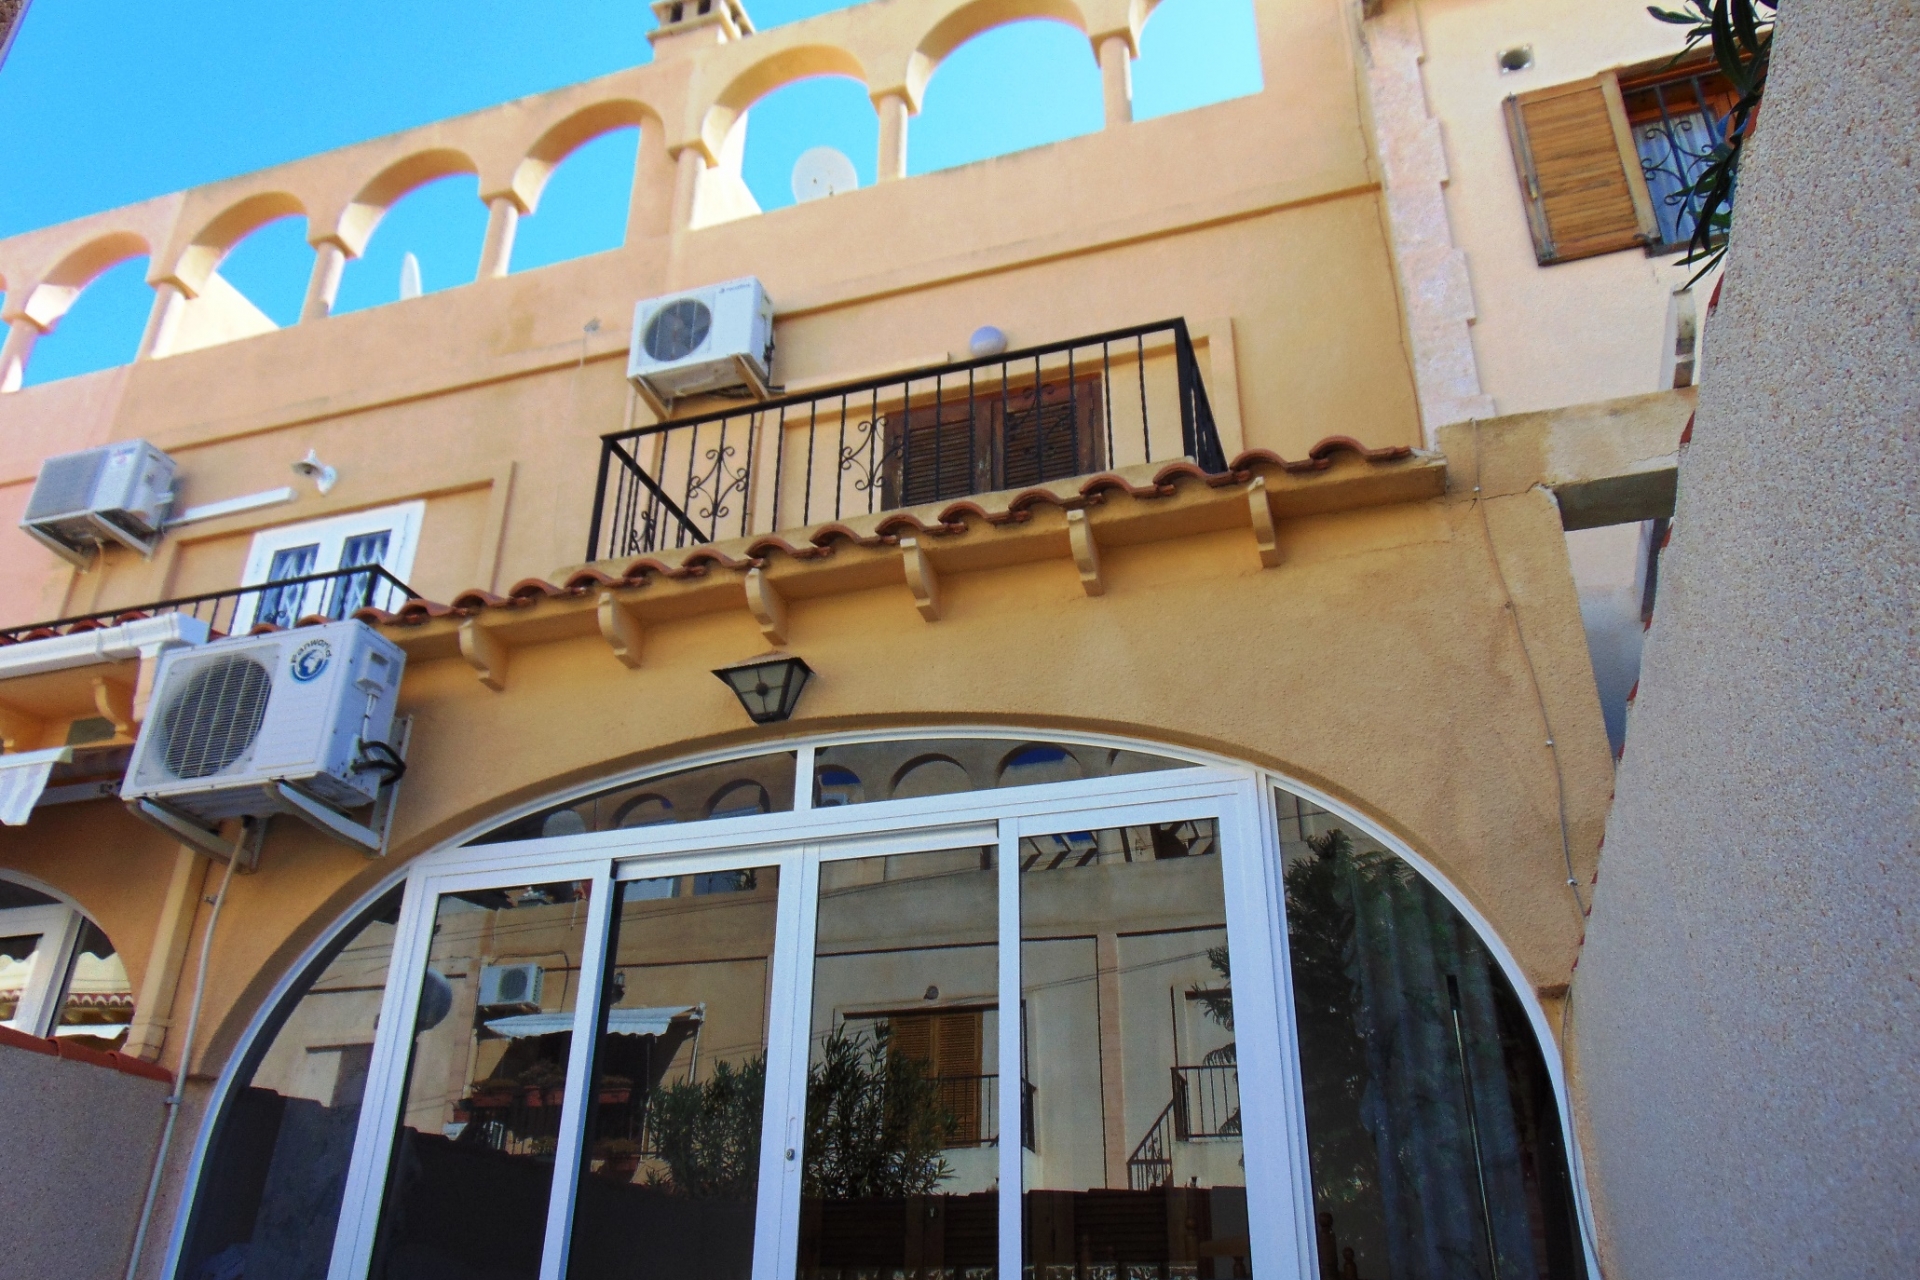 Property Sold - Townhouse for sale - Torrevieja - El Chaparral